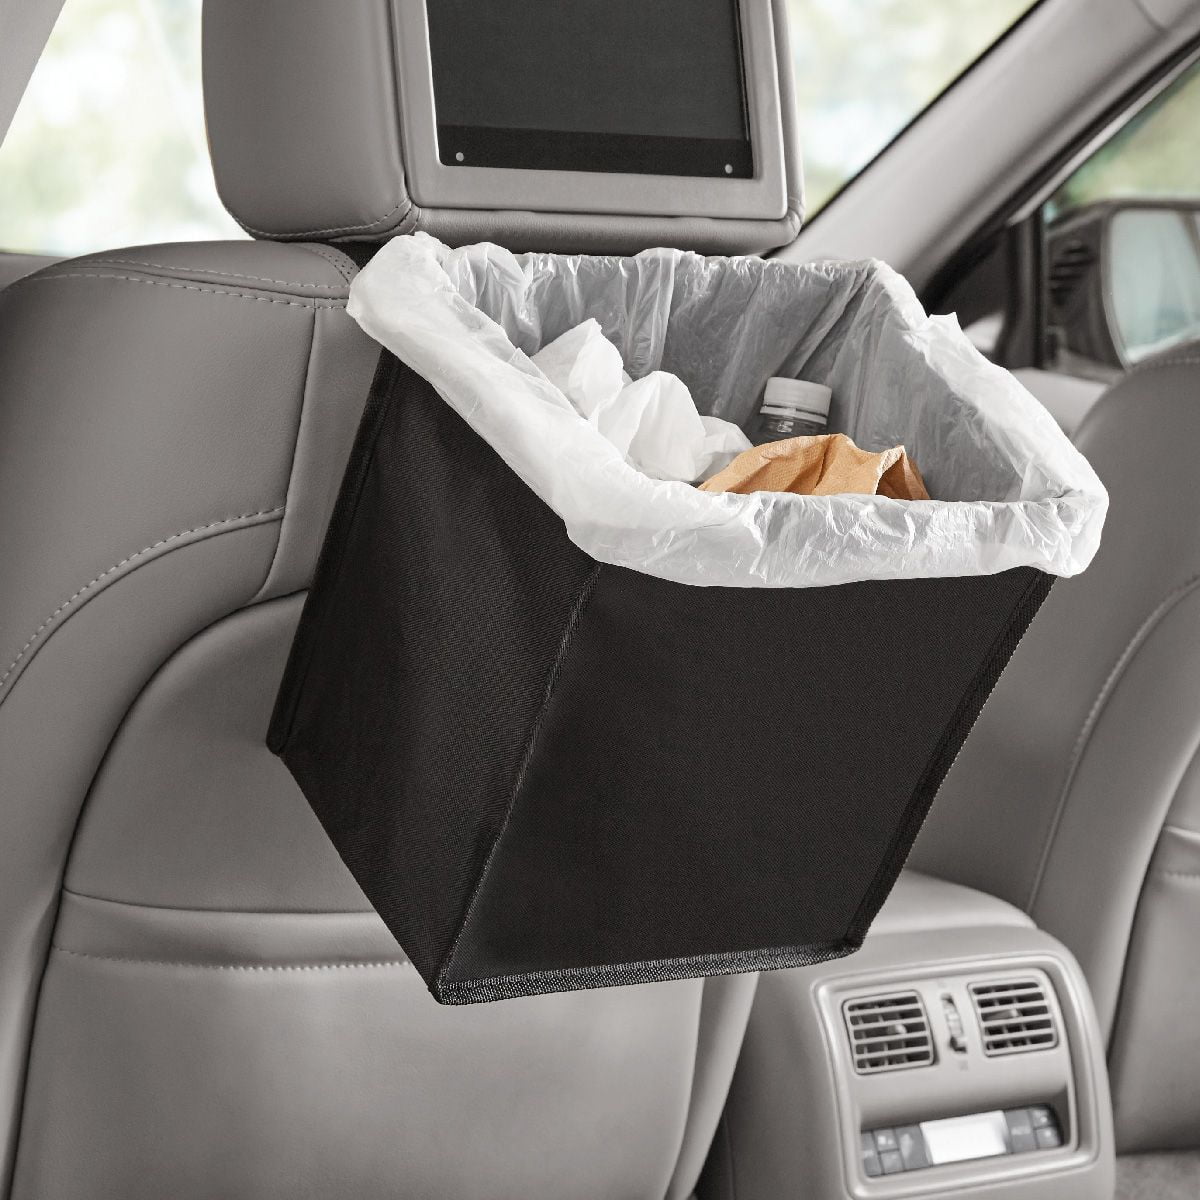 Auto Drive Black Car Seat Trash Bag Fits Most Vehicles Size: 7" x 9.5" x 11"